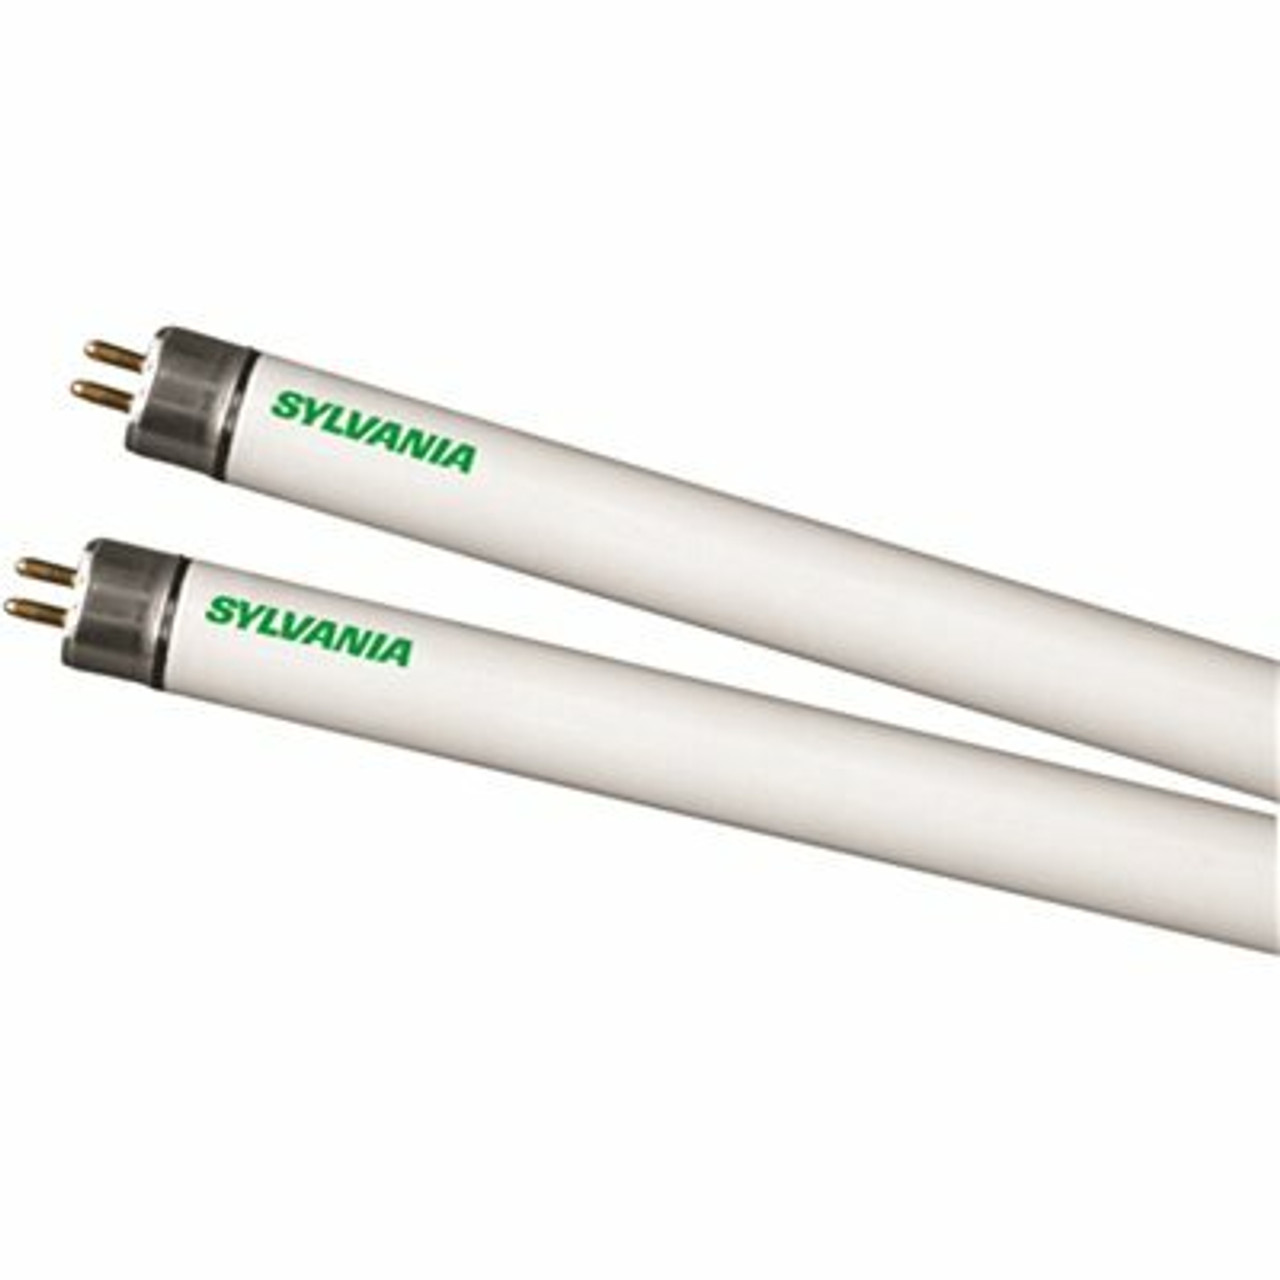 Sylvania 2 Ft. 14-Watt Linear T5 Fluorescent Tube Light Bulb, Daylight (1-Bulb)